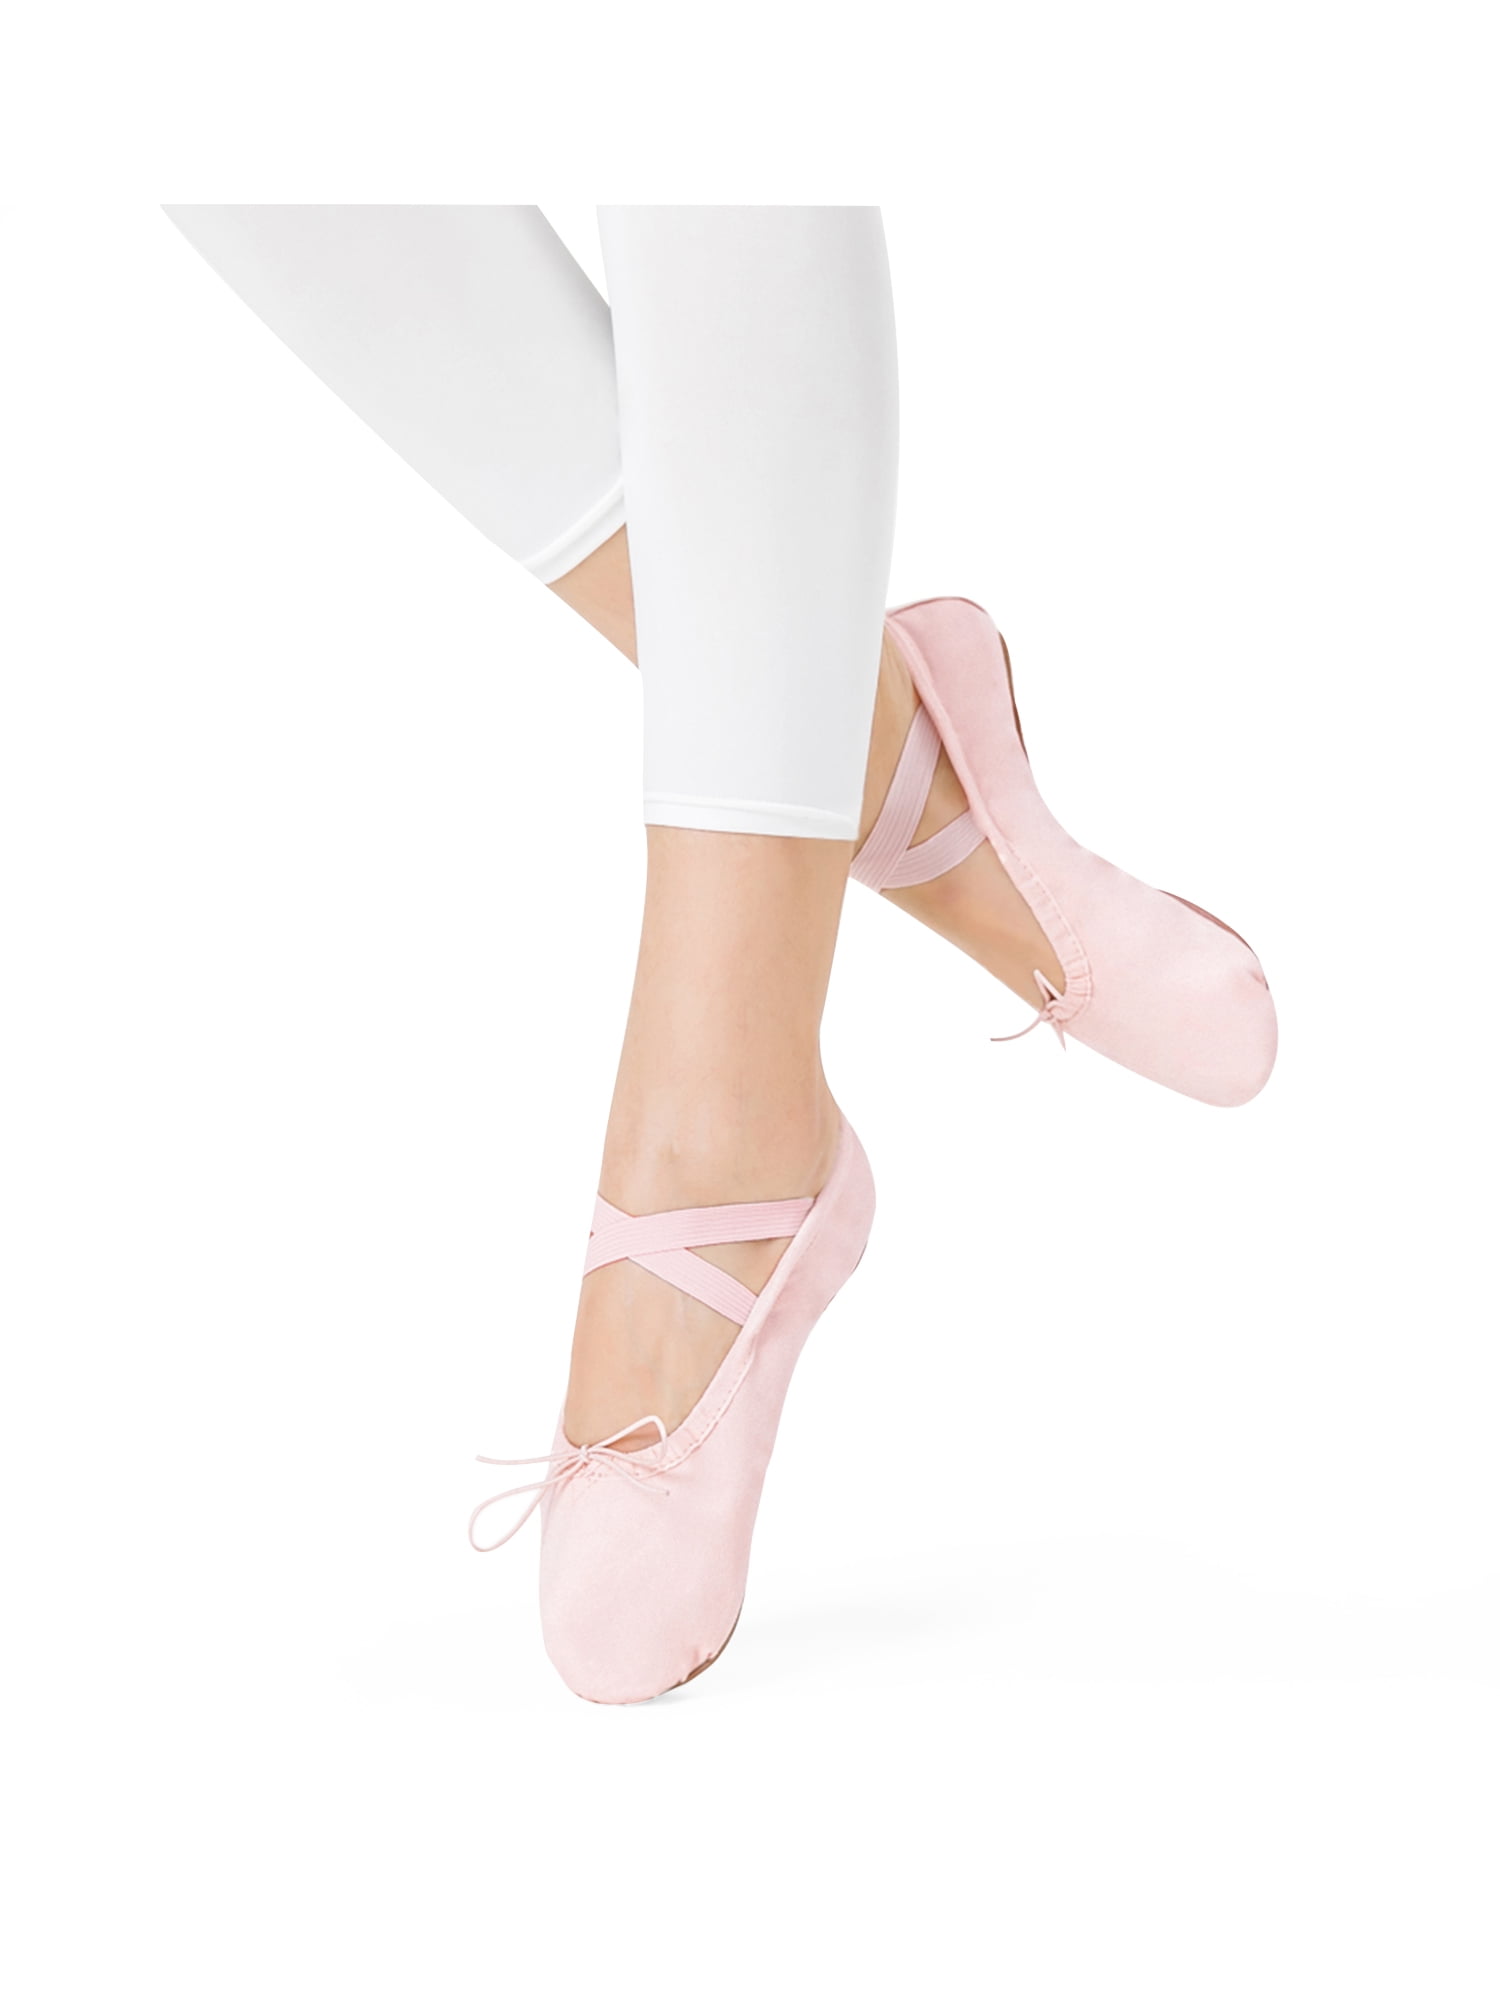 Girls Ballet Shoes Canvas Ballet Slipper Leather Split Sole Gymnastic Dance Flat Shoes for Women Children Adults 5 UK Child Beige